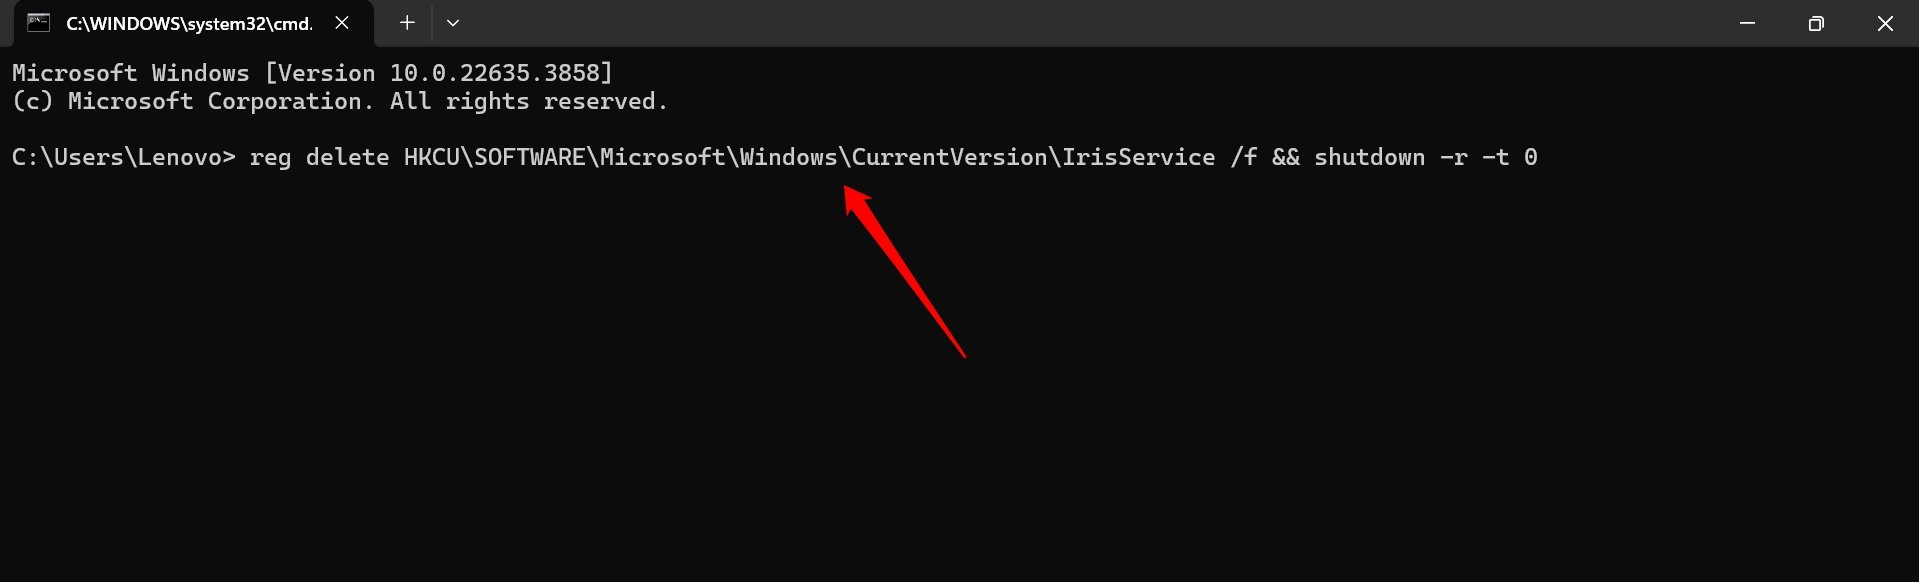 delete IRIS service configuration Windows 11